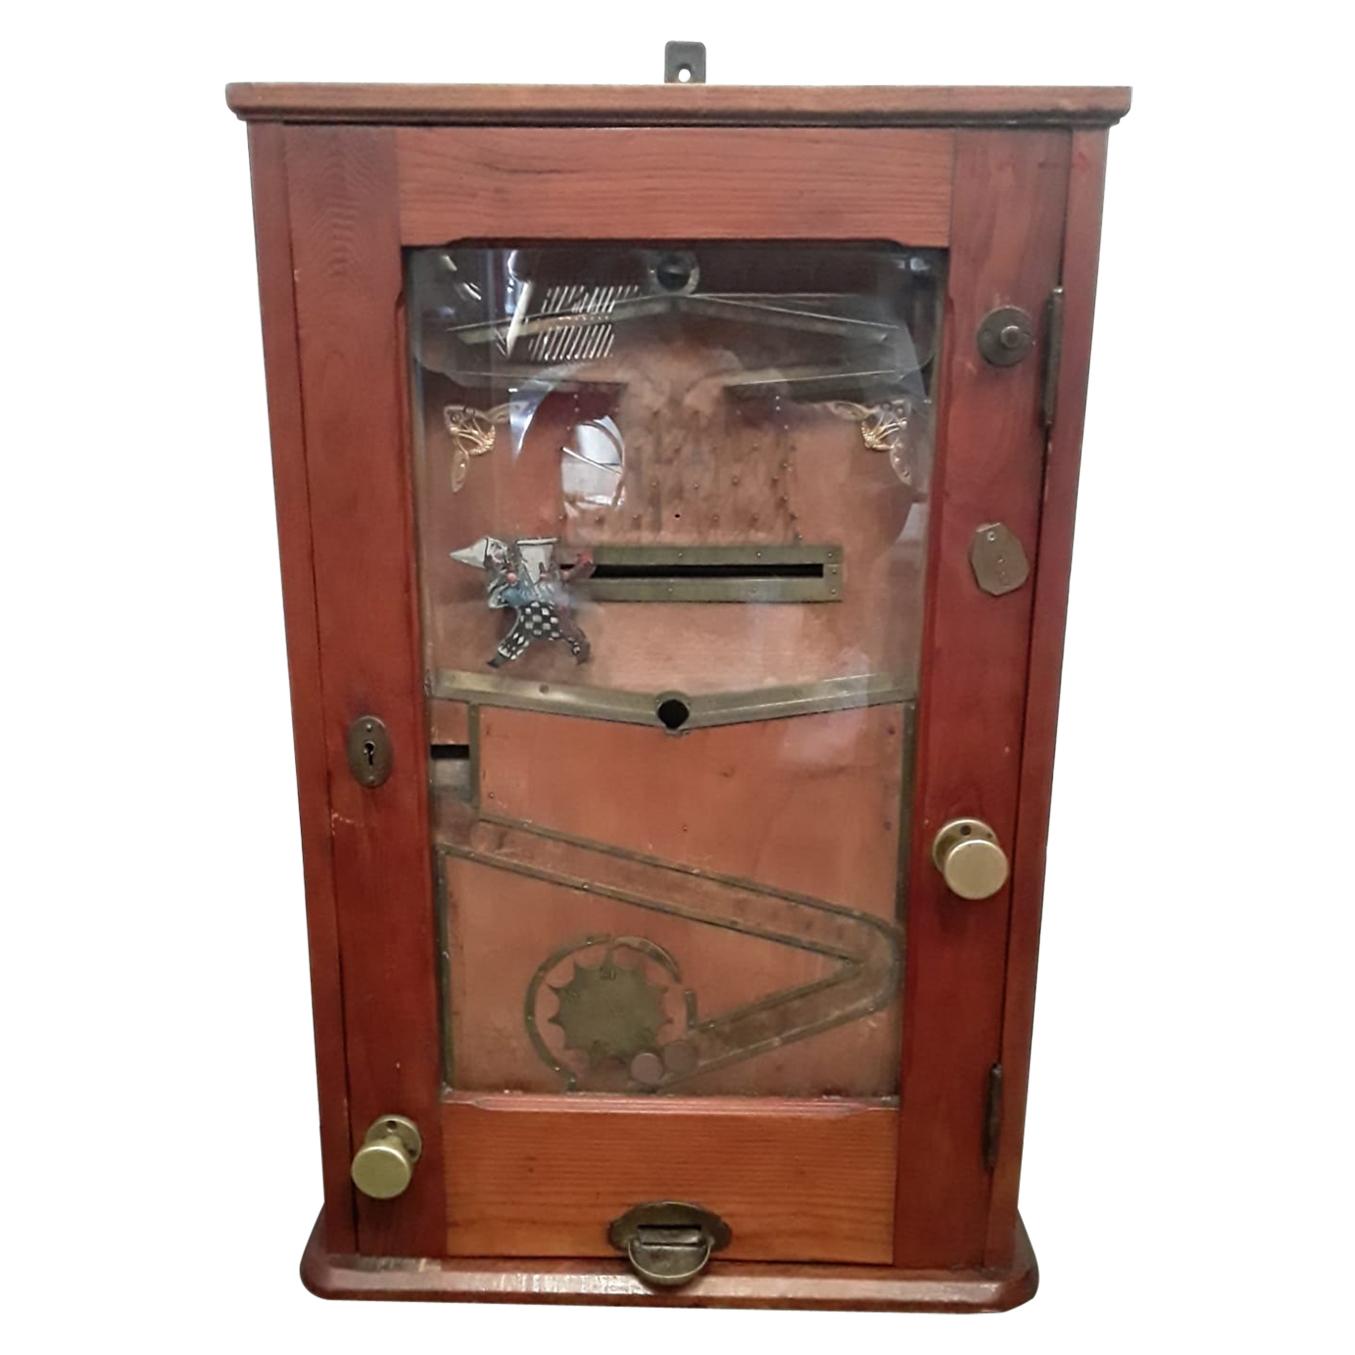 "the Bajazzo" Wooden Slot Machine, Art Nouveau Slot Machine